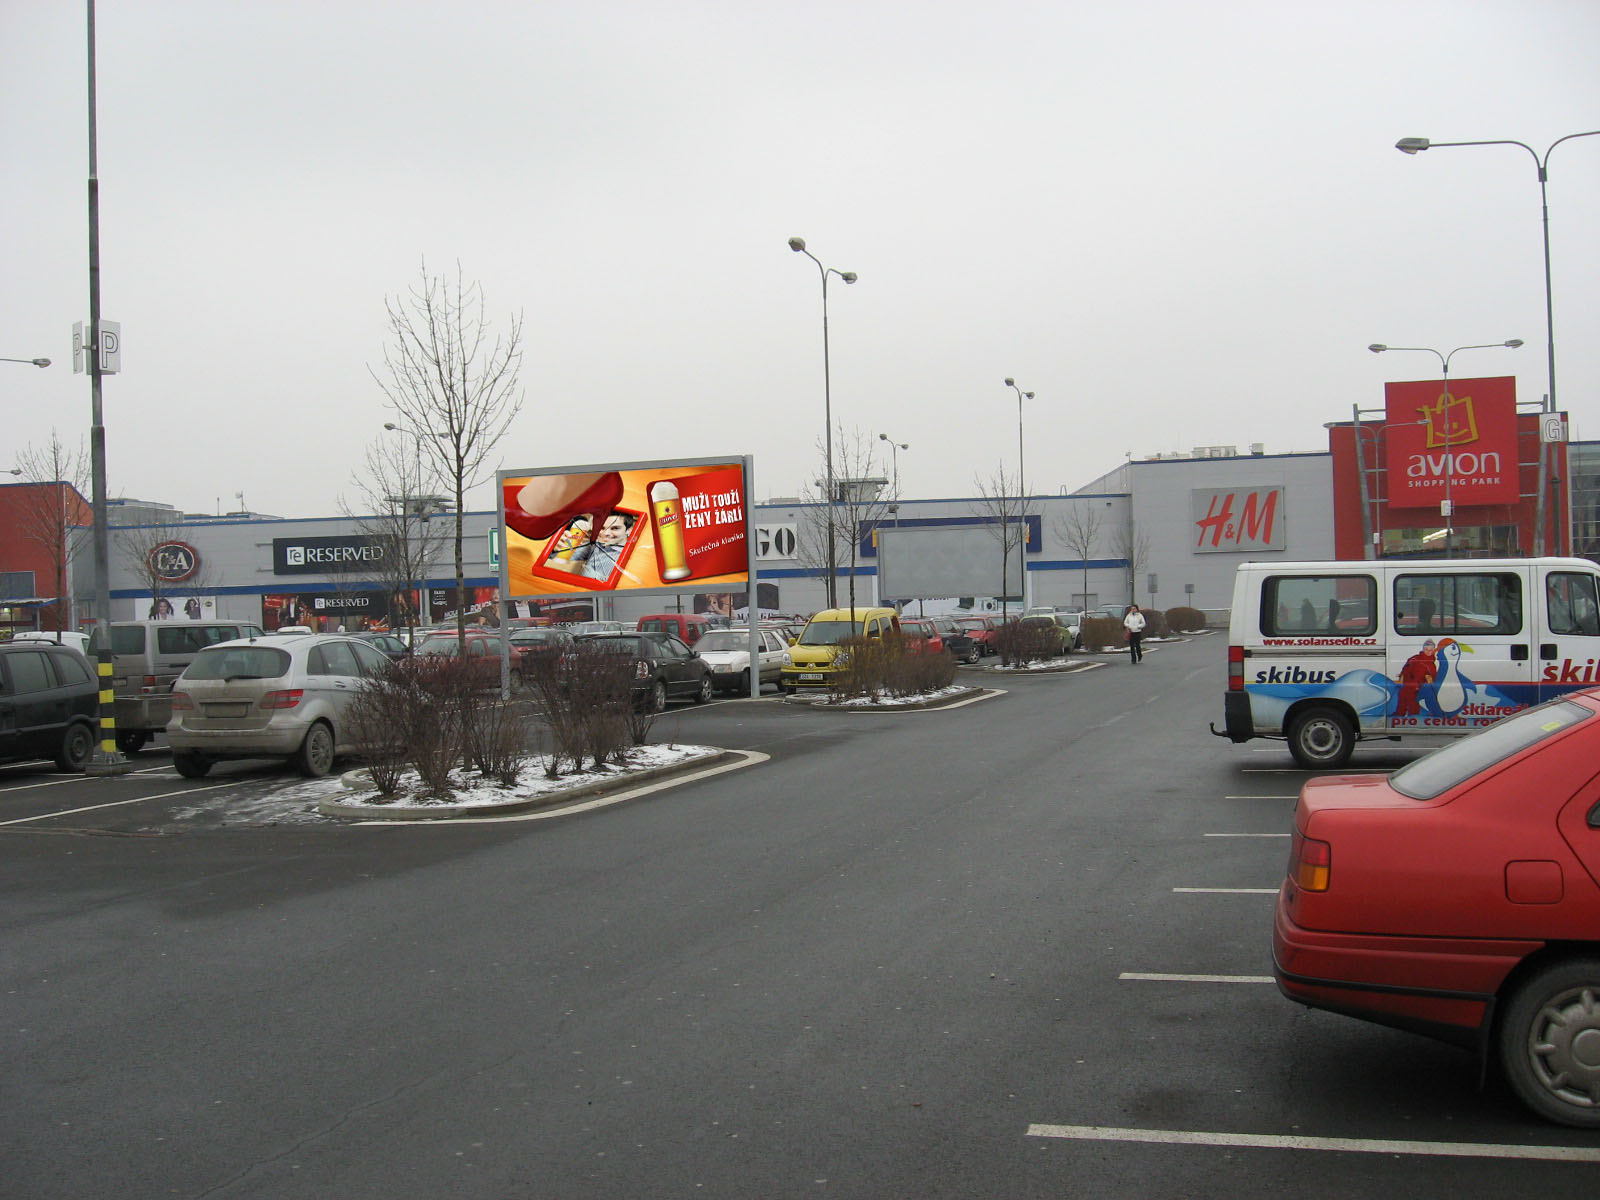 871118 Billboard, Ostrava (OC AVION Shopping Park Ostrava)